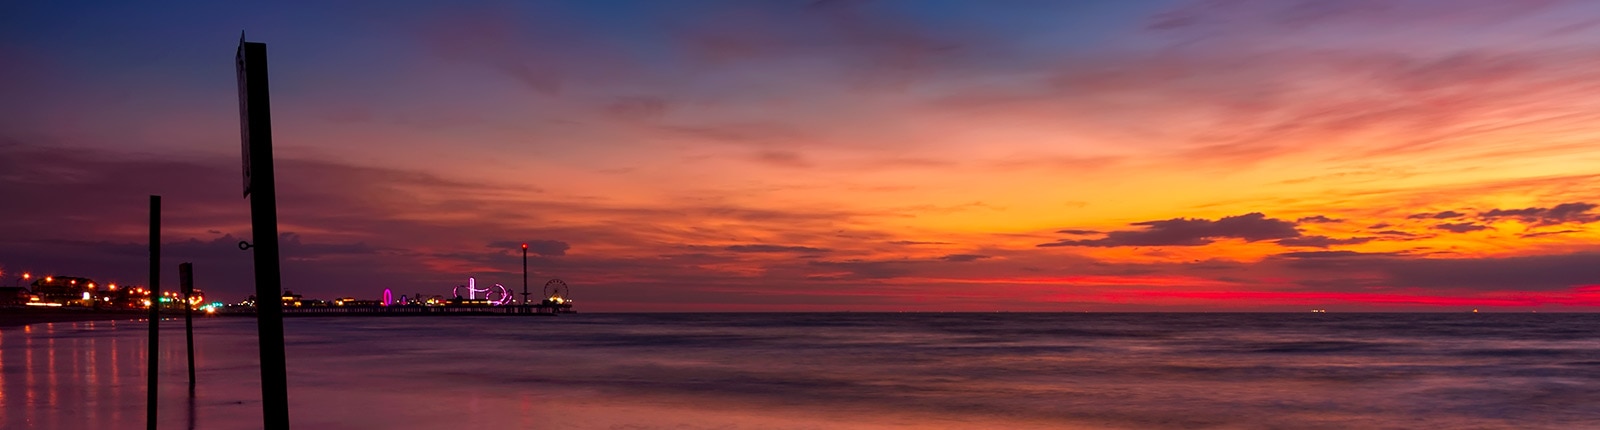 Colorful sunset along the coastline in Galveston, TX